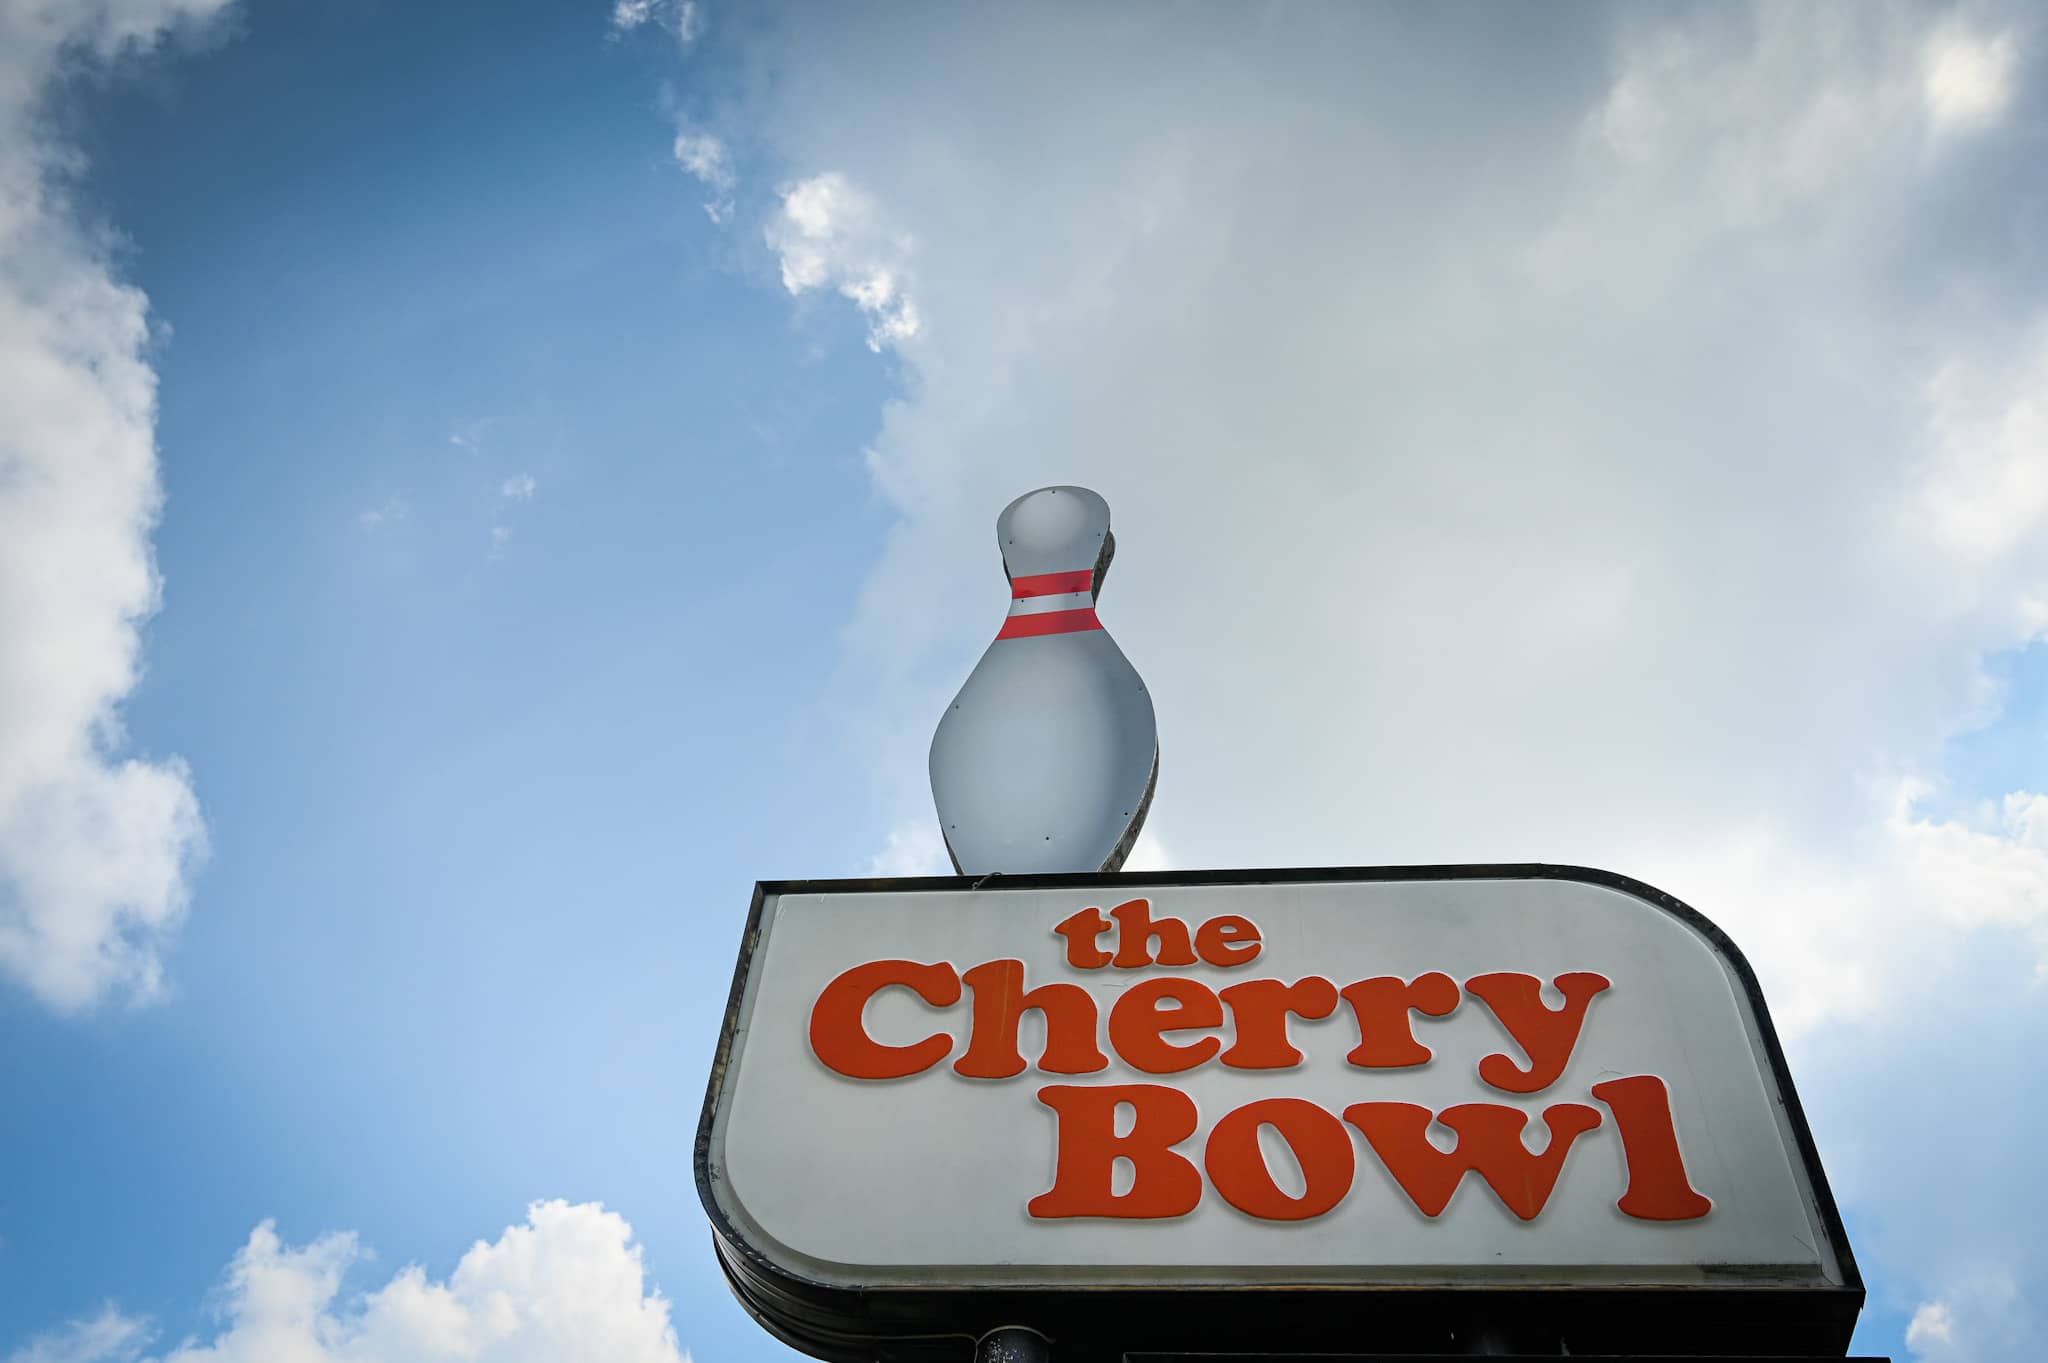 PWBA Tour kicks off at Cherry Bowl, bringing hundreds of visitors to